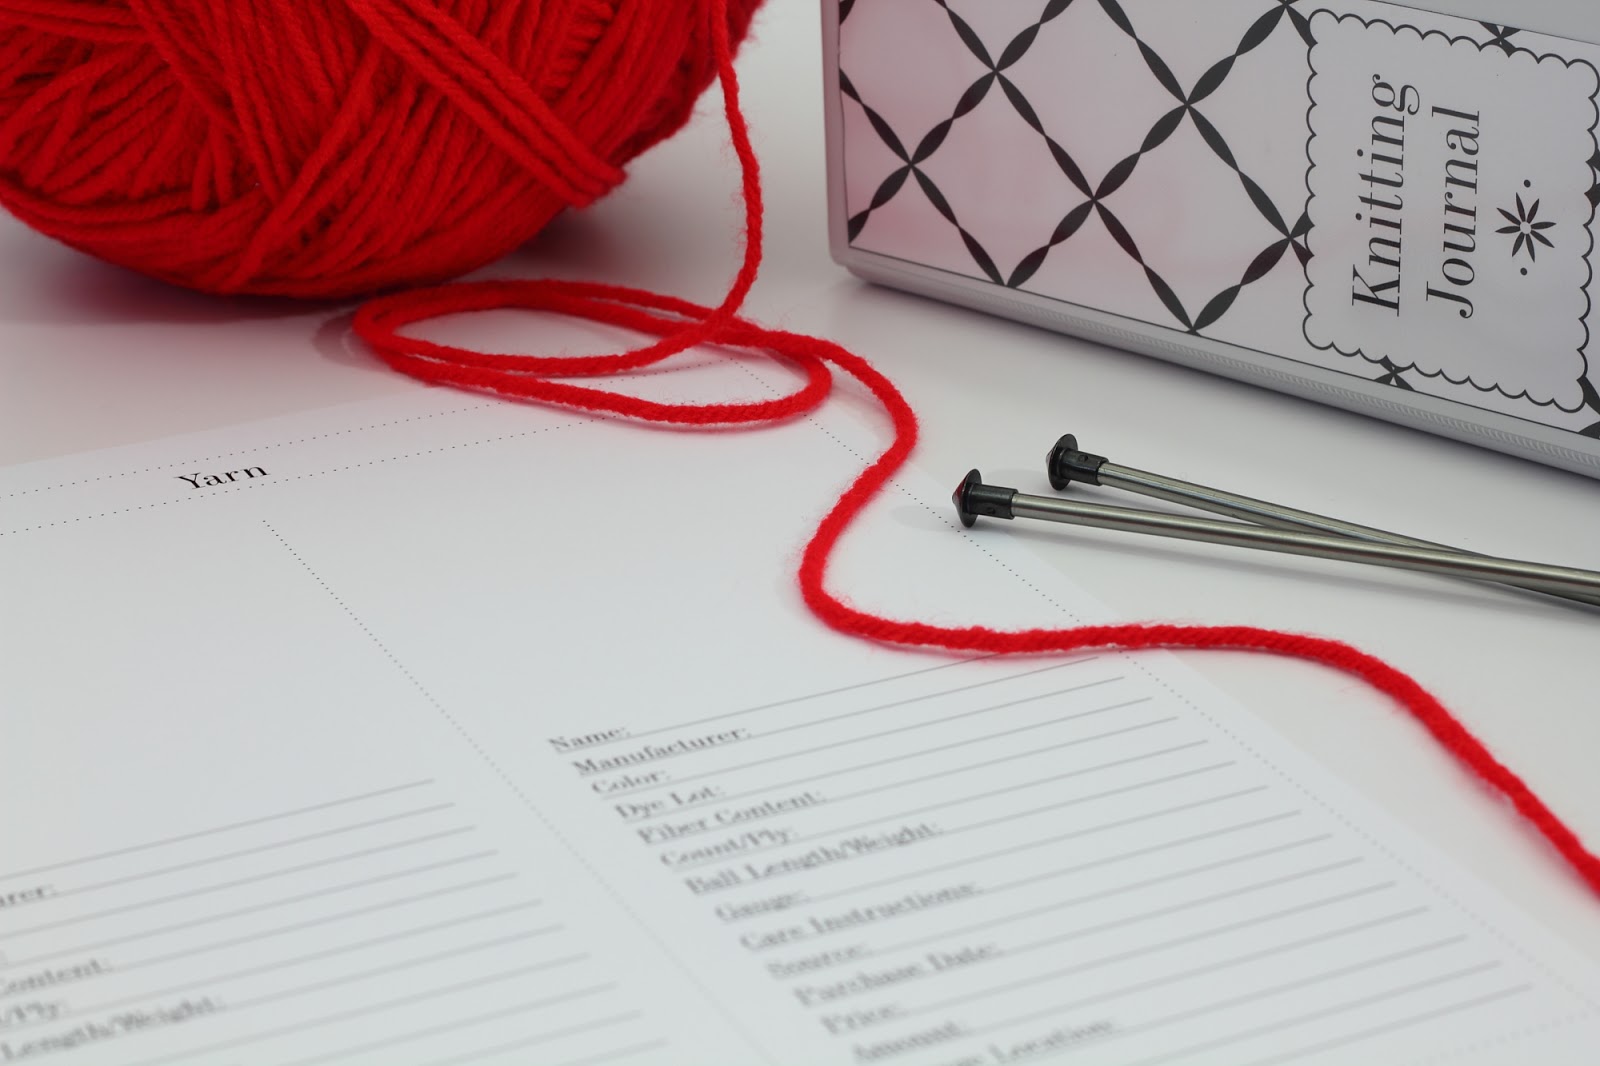 big B: Organization - Knitting Journal